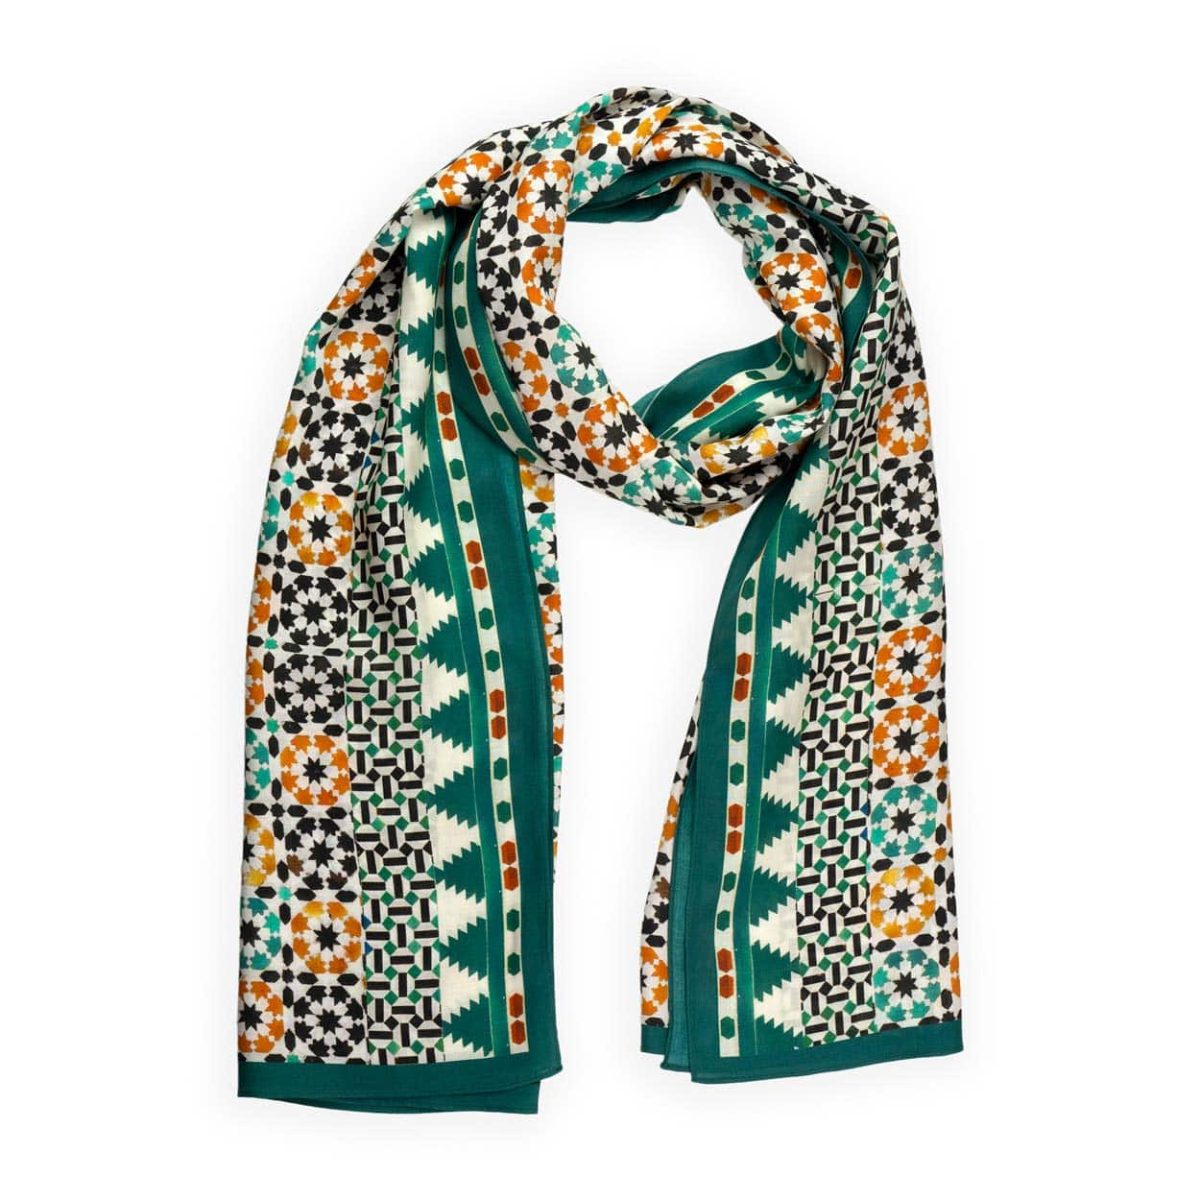 Islamic art inspired green and orange scarf